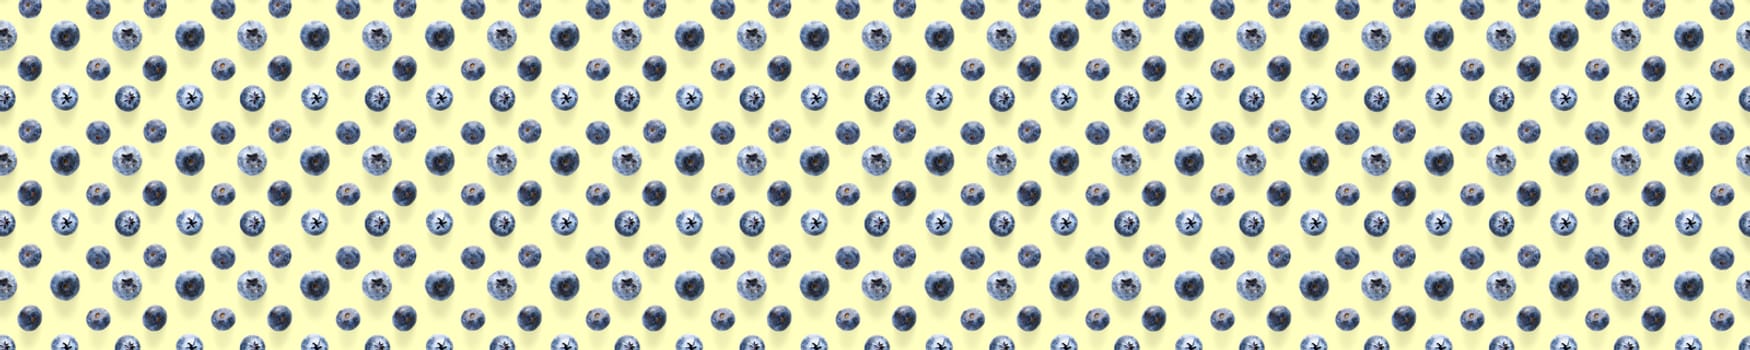 Background of Freshly picked blueberries on yellow backdrop. Blackberry modern flatlay background.